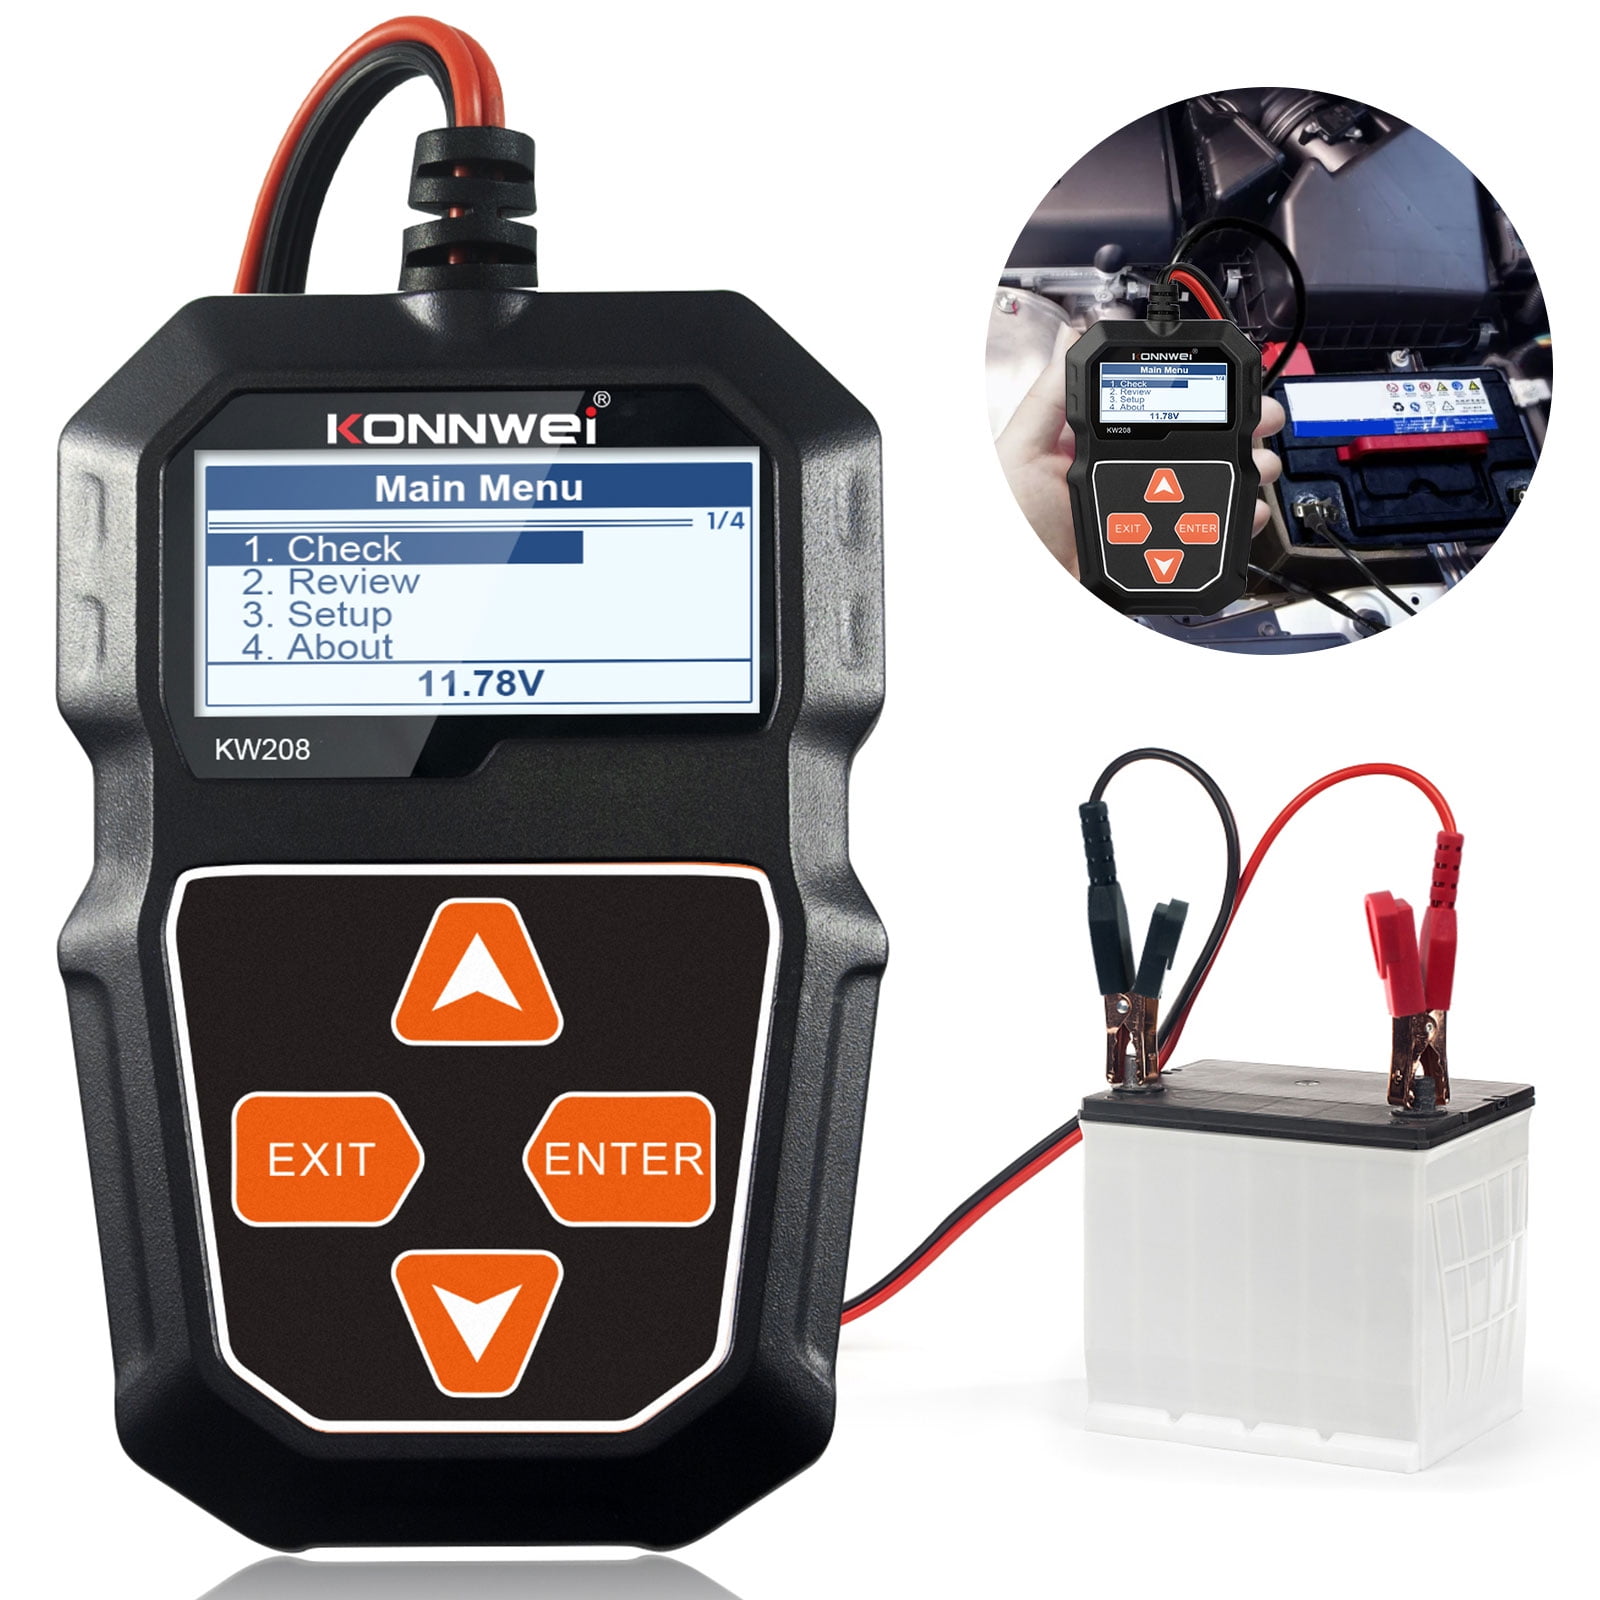 12V Auto Car Battery Tester Digital 100-2000CCA Cranking Charging Test Analyzer 